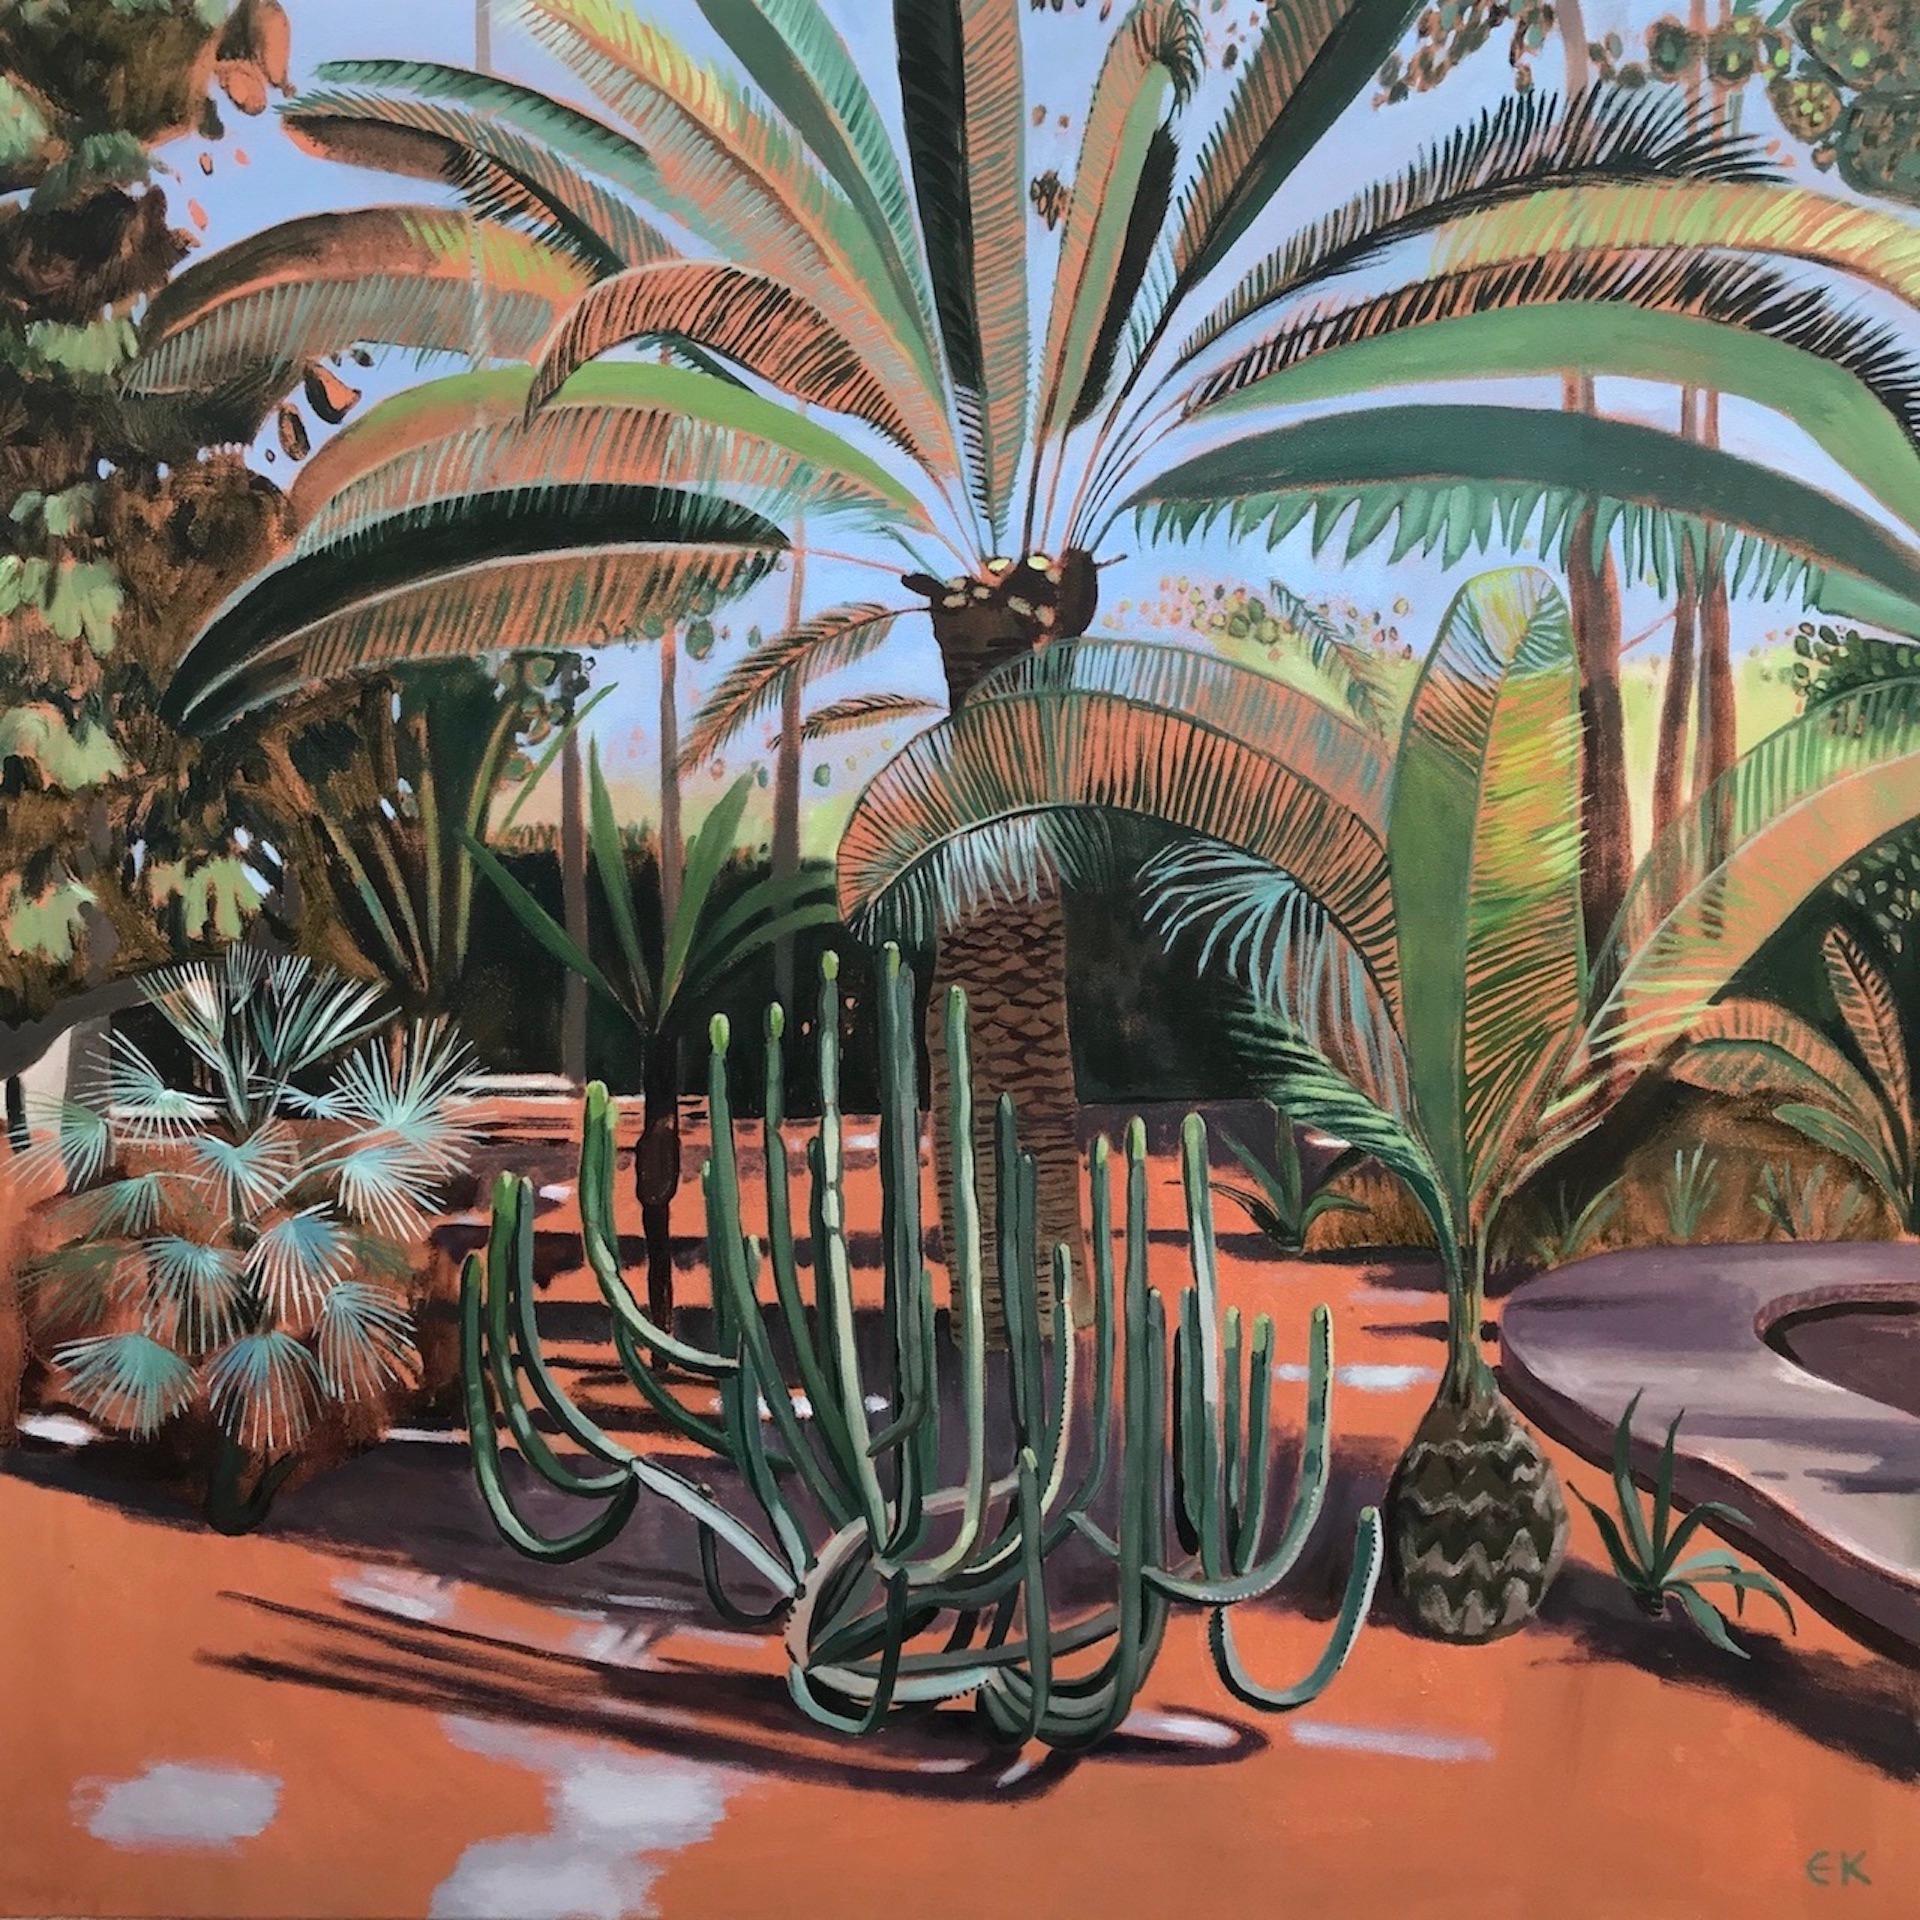 Elaine Kazimierczuk, Cactus and Large Palm, Majorelle Gardens, Morocco 